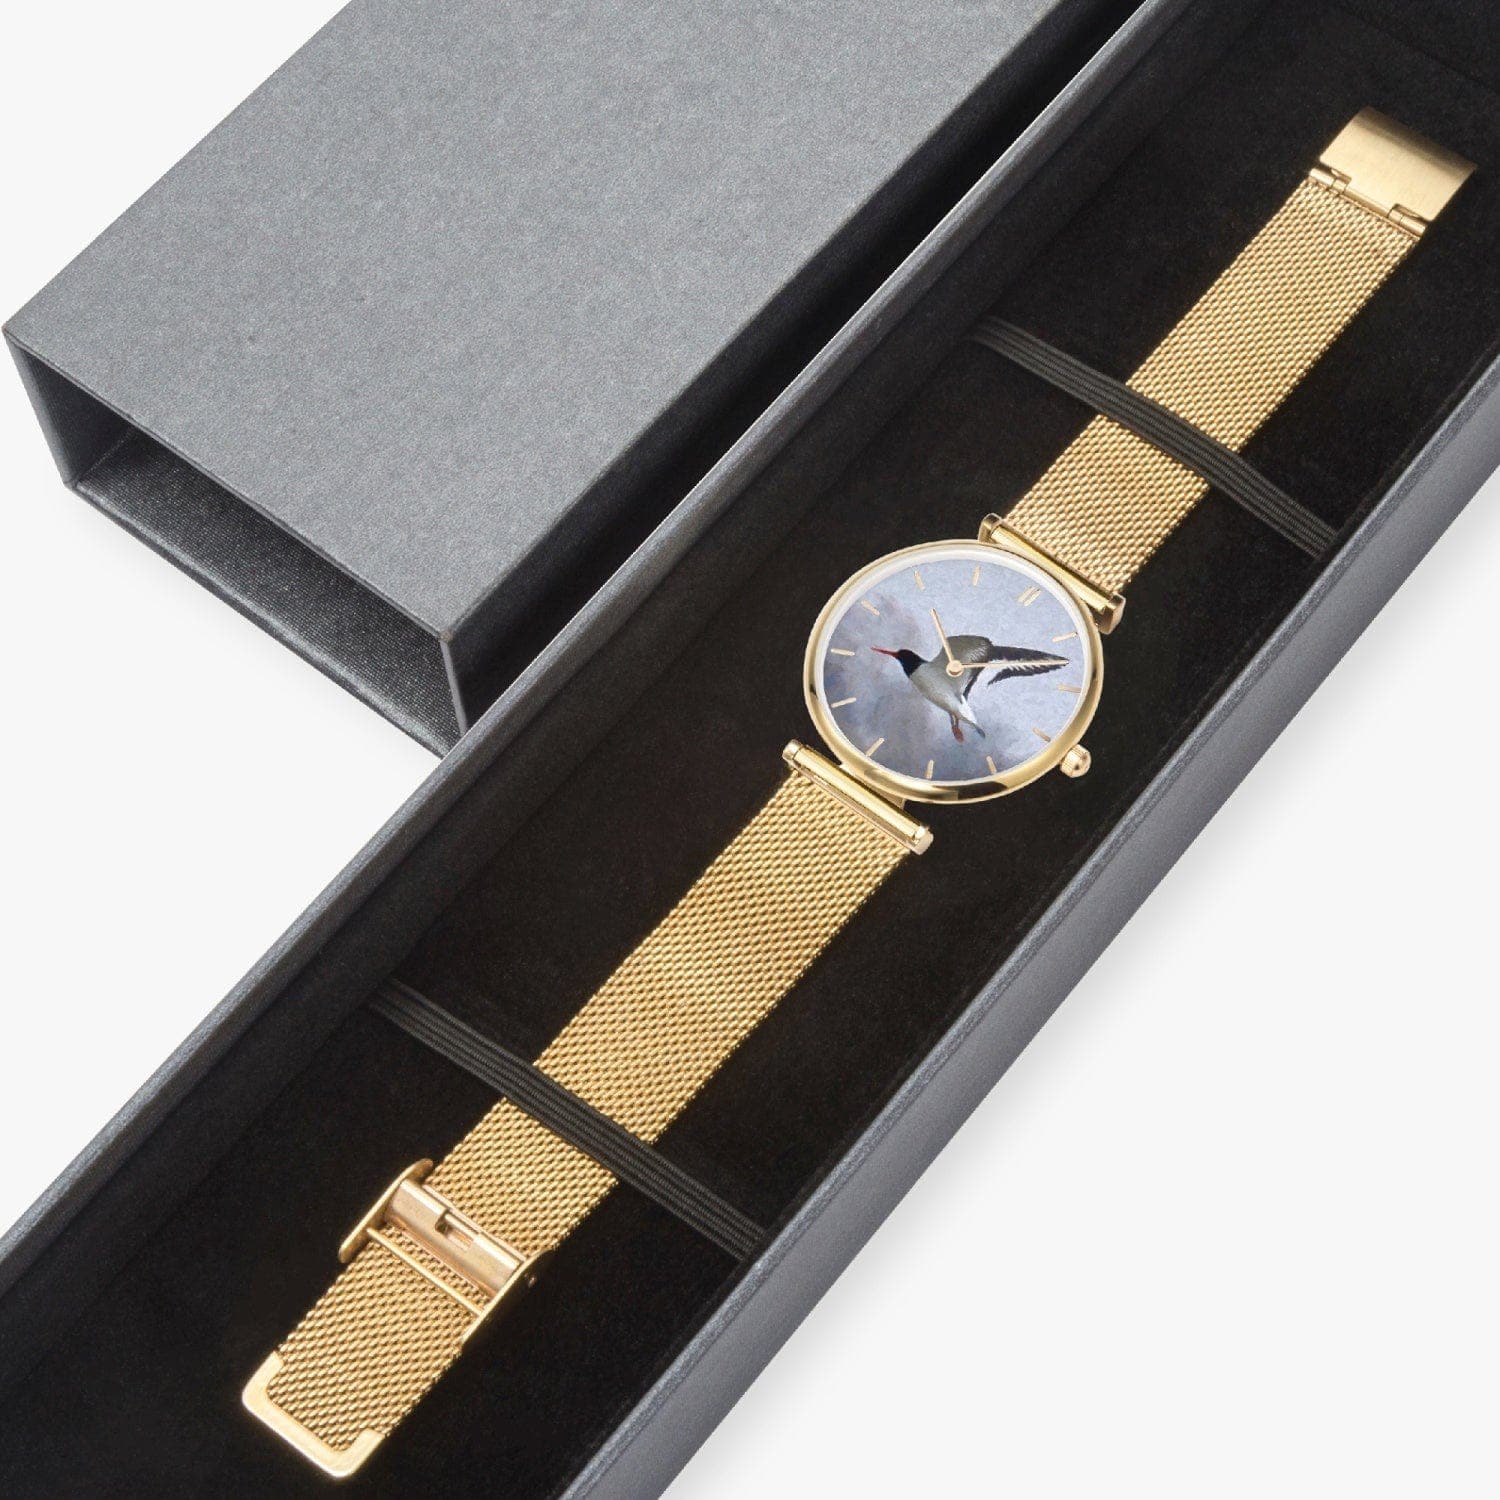 Time flies. New Stylish Ultra-Thin Quartz Watch (With Indicators), by Sensus Studio Design